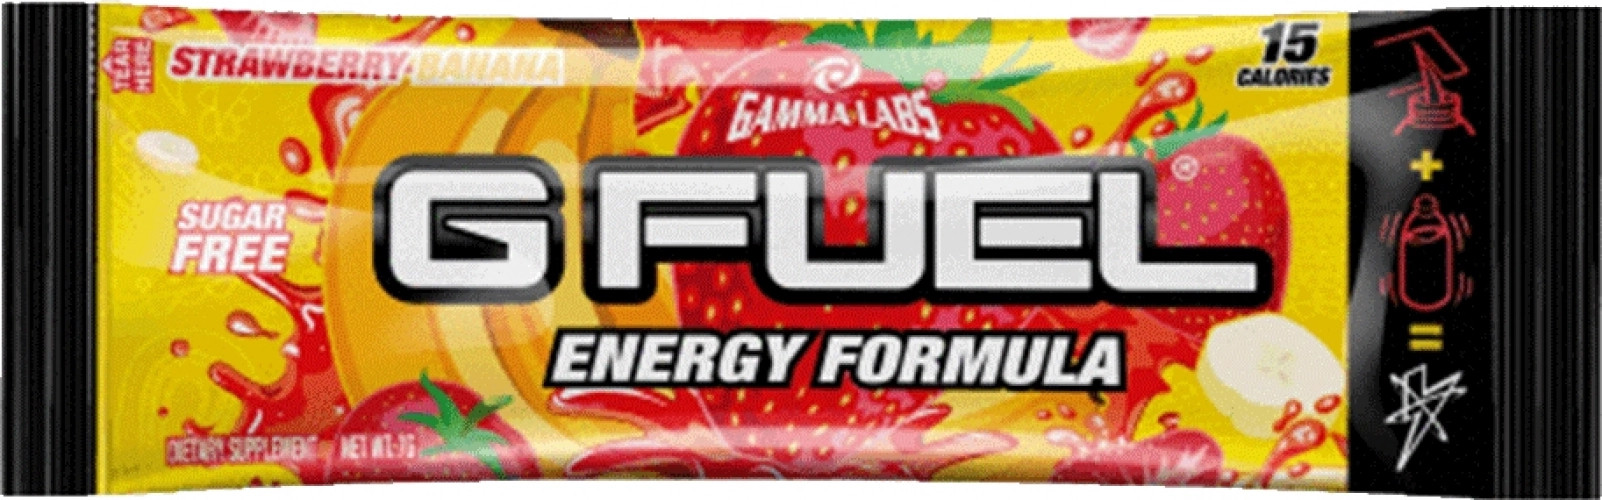 GFuel Energy Formula - Strawberry Banana Sample